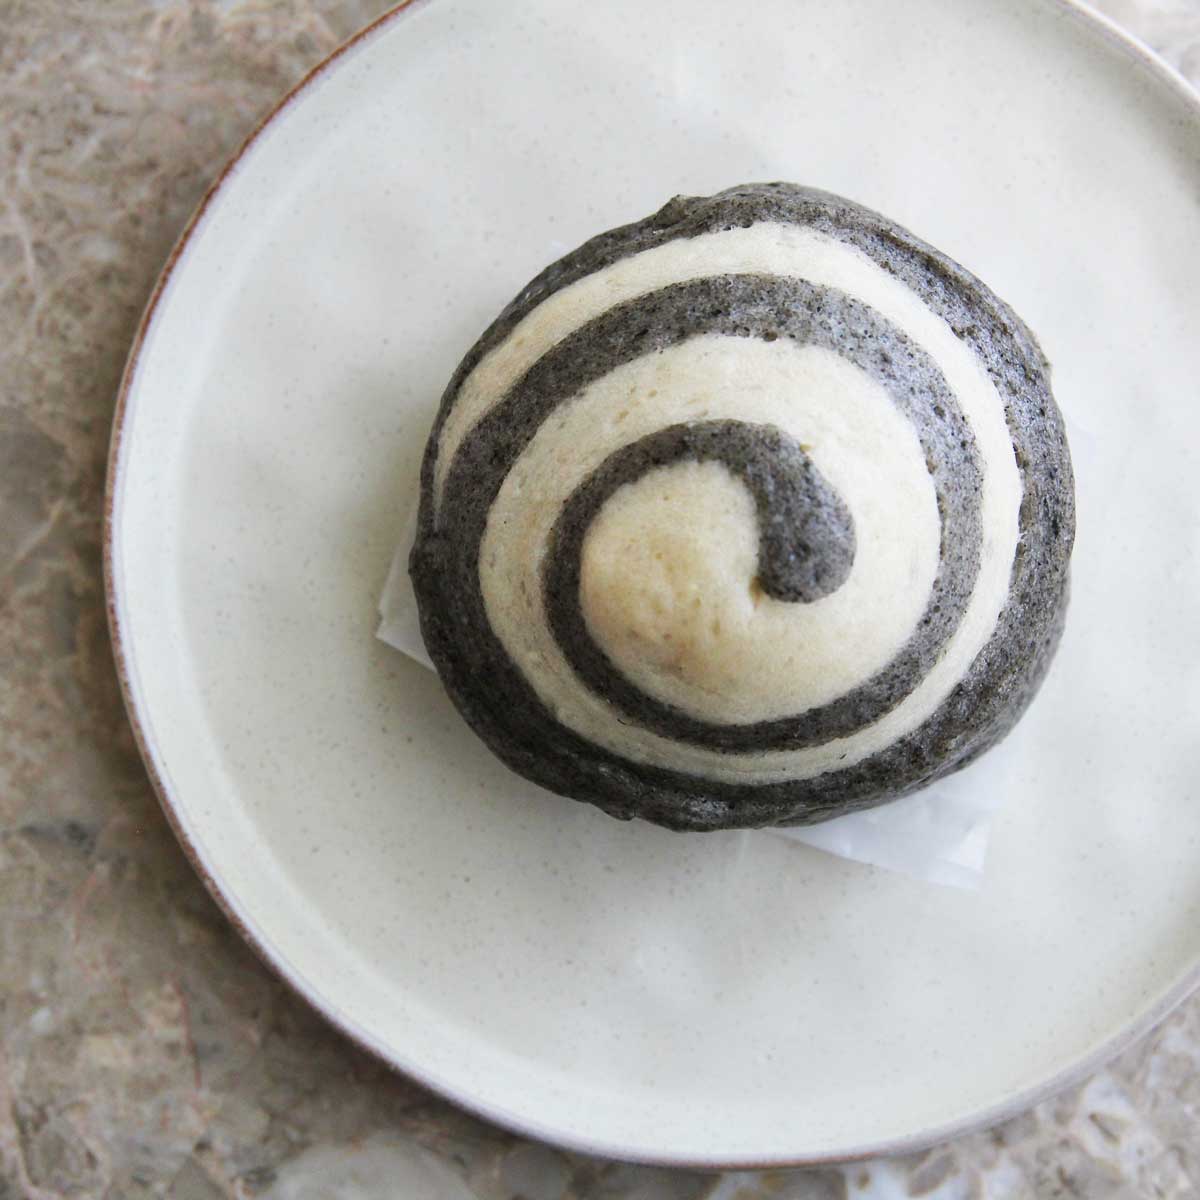 Homemade Black Sesame & Almond Milk Spiral Mantou (Vegan Steamed Buns Recipe) - Black Sesame Glutinous Rice Balls